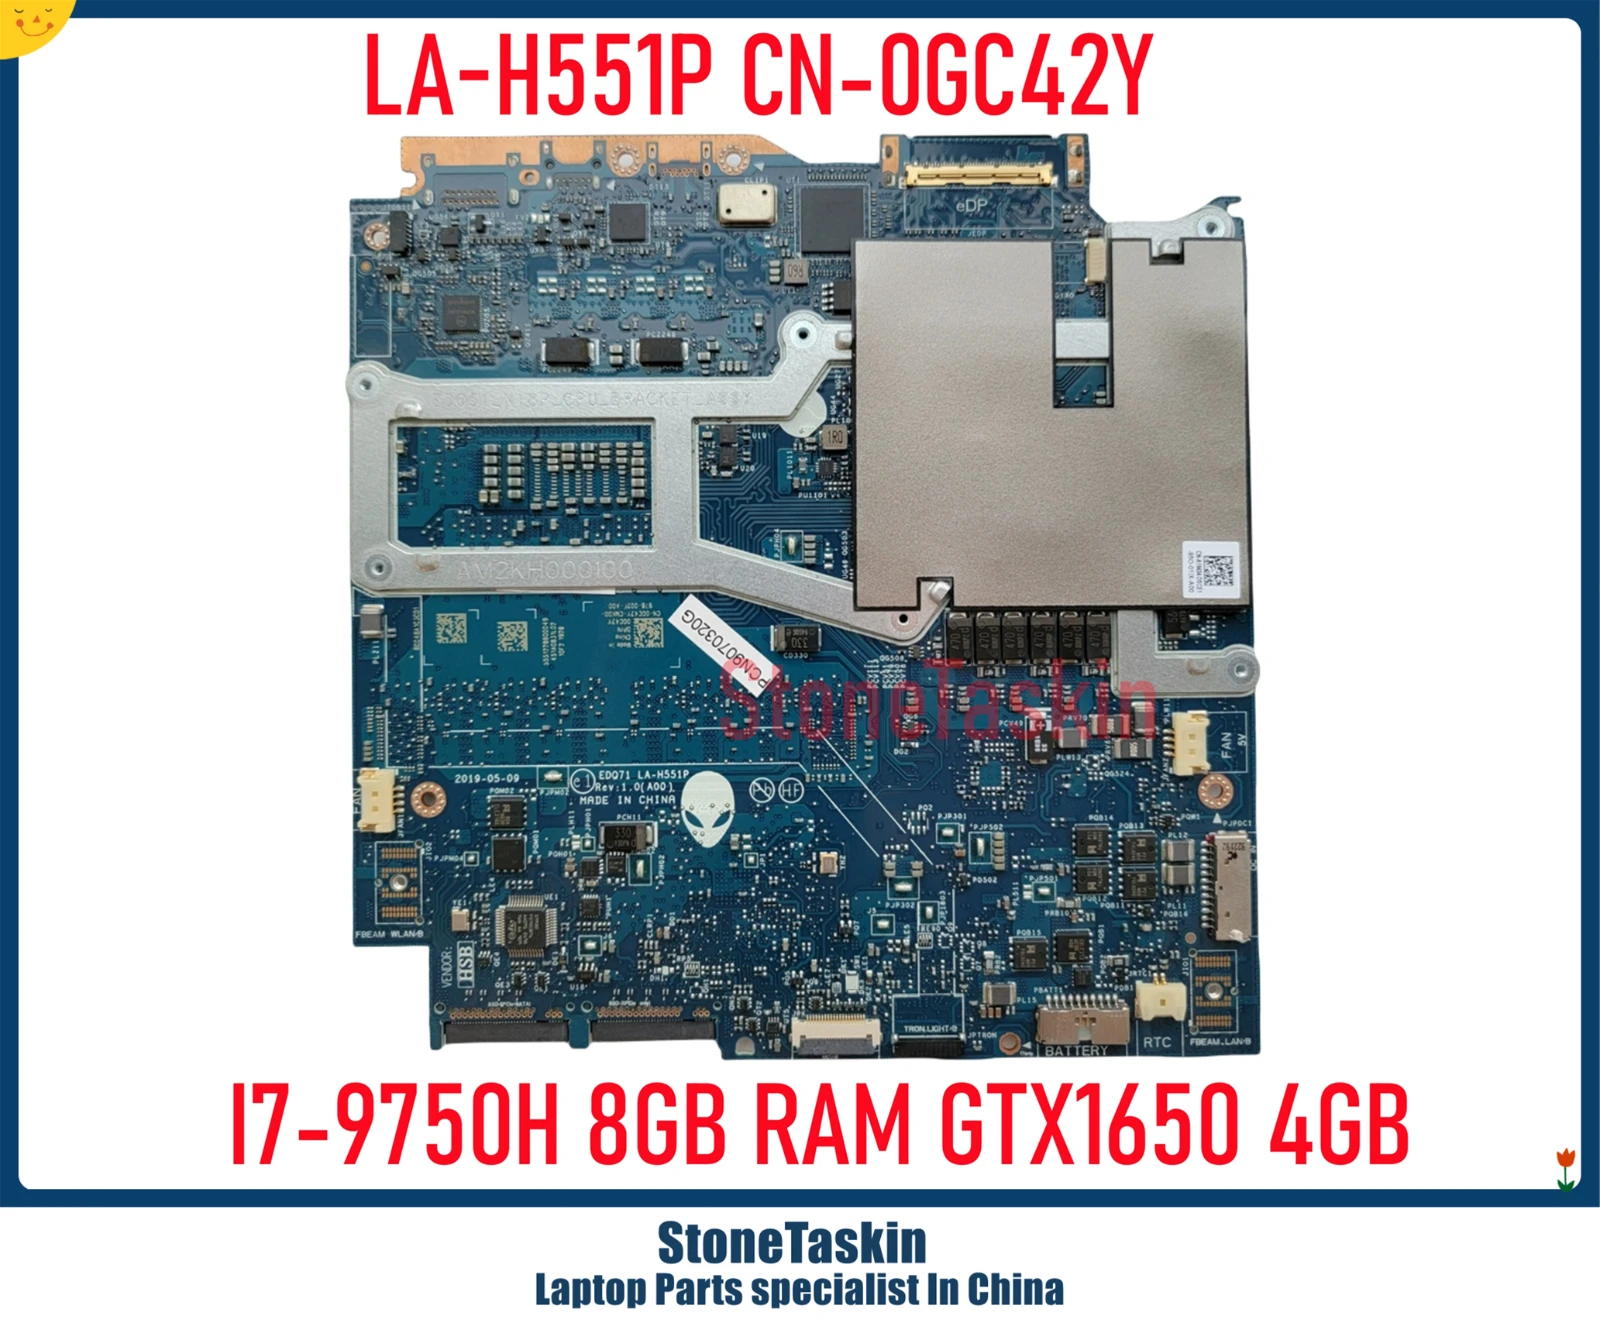 StoneTaskin Kasutada CN-0GC42Y LA-H551P Dell Alienware M17 R2 Sülearvuti Emaplaadi I7-9750H CPU GTX1650 4GB GPU 8GB RAM DDR4 GC42Y3